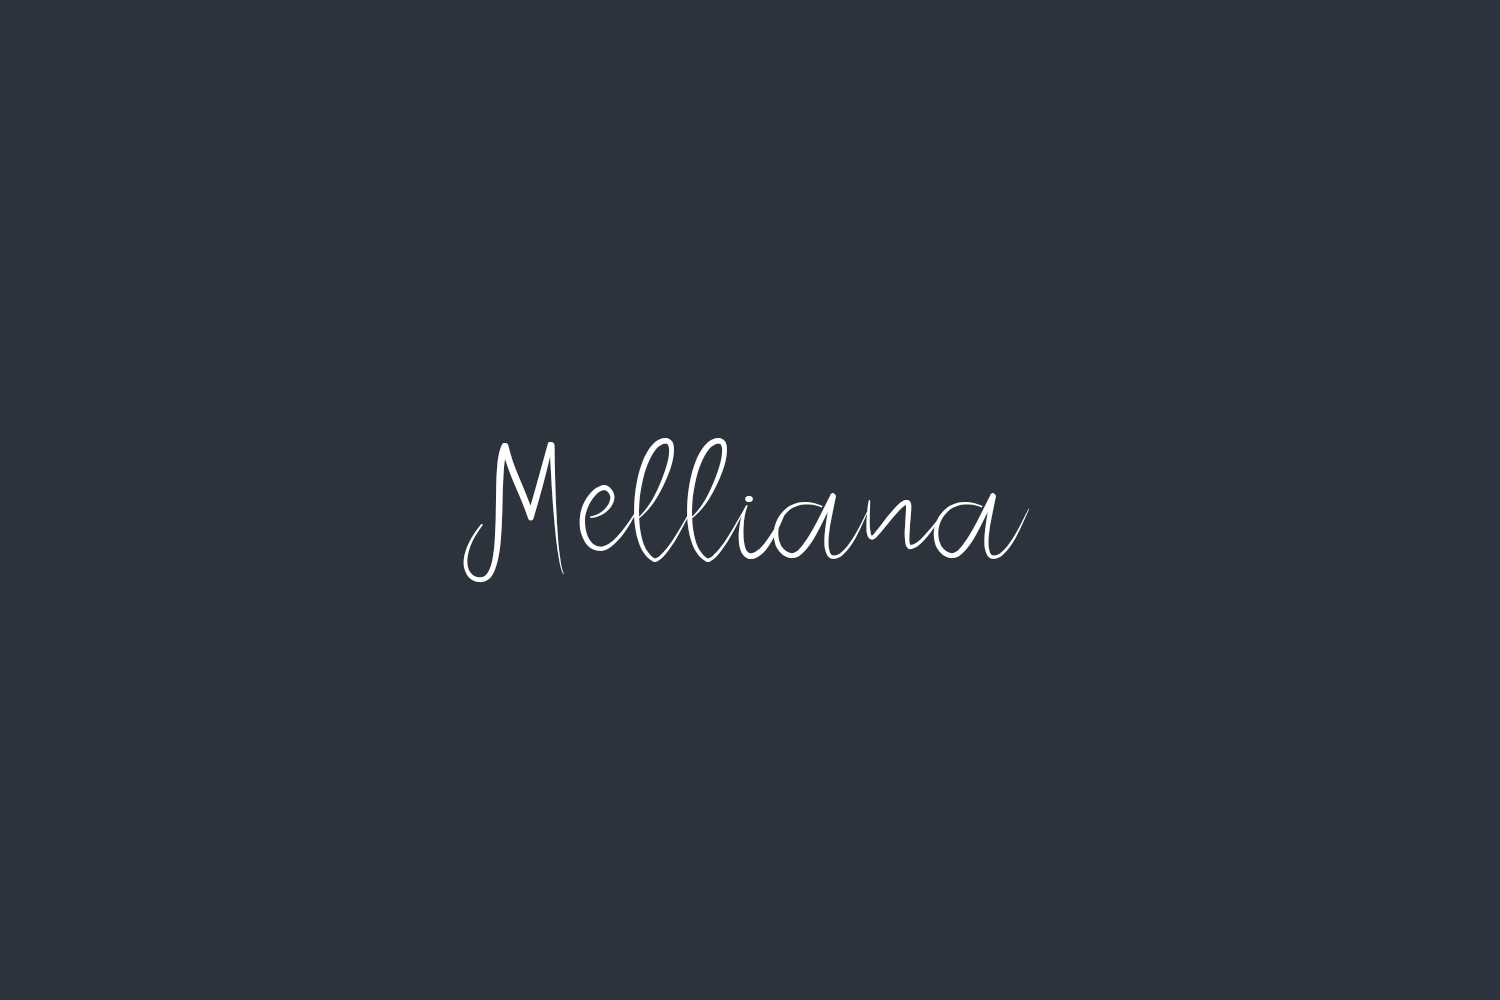 Melliana Free Font